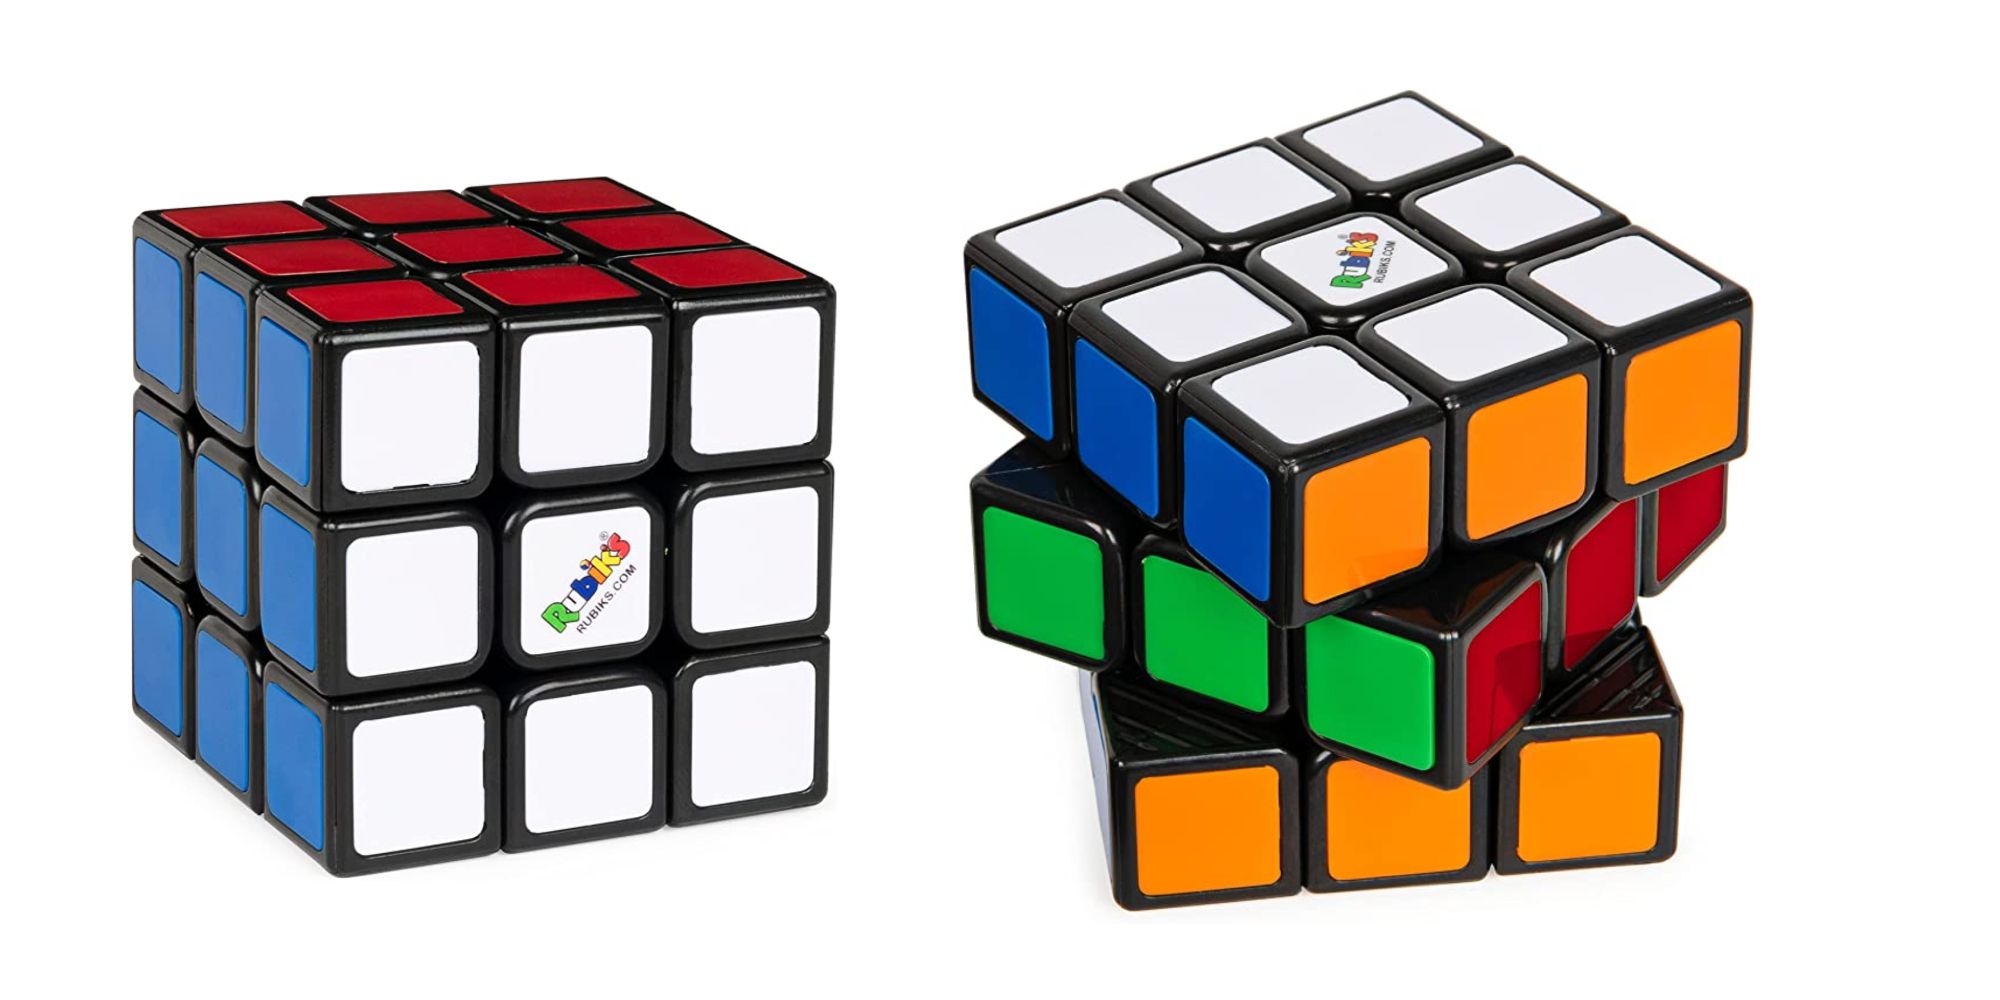 original Rubik's cube from Amazon